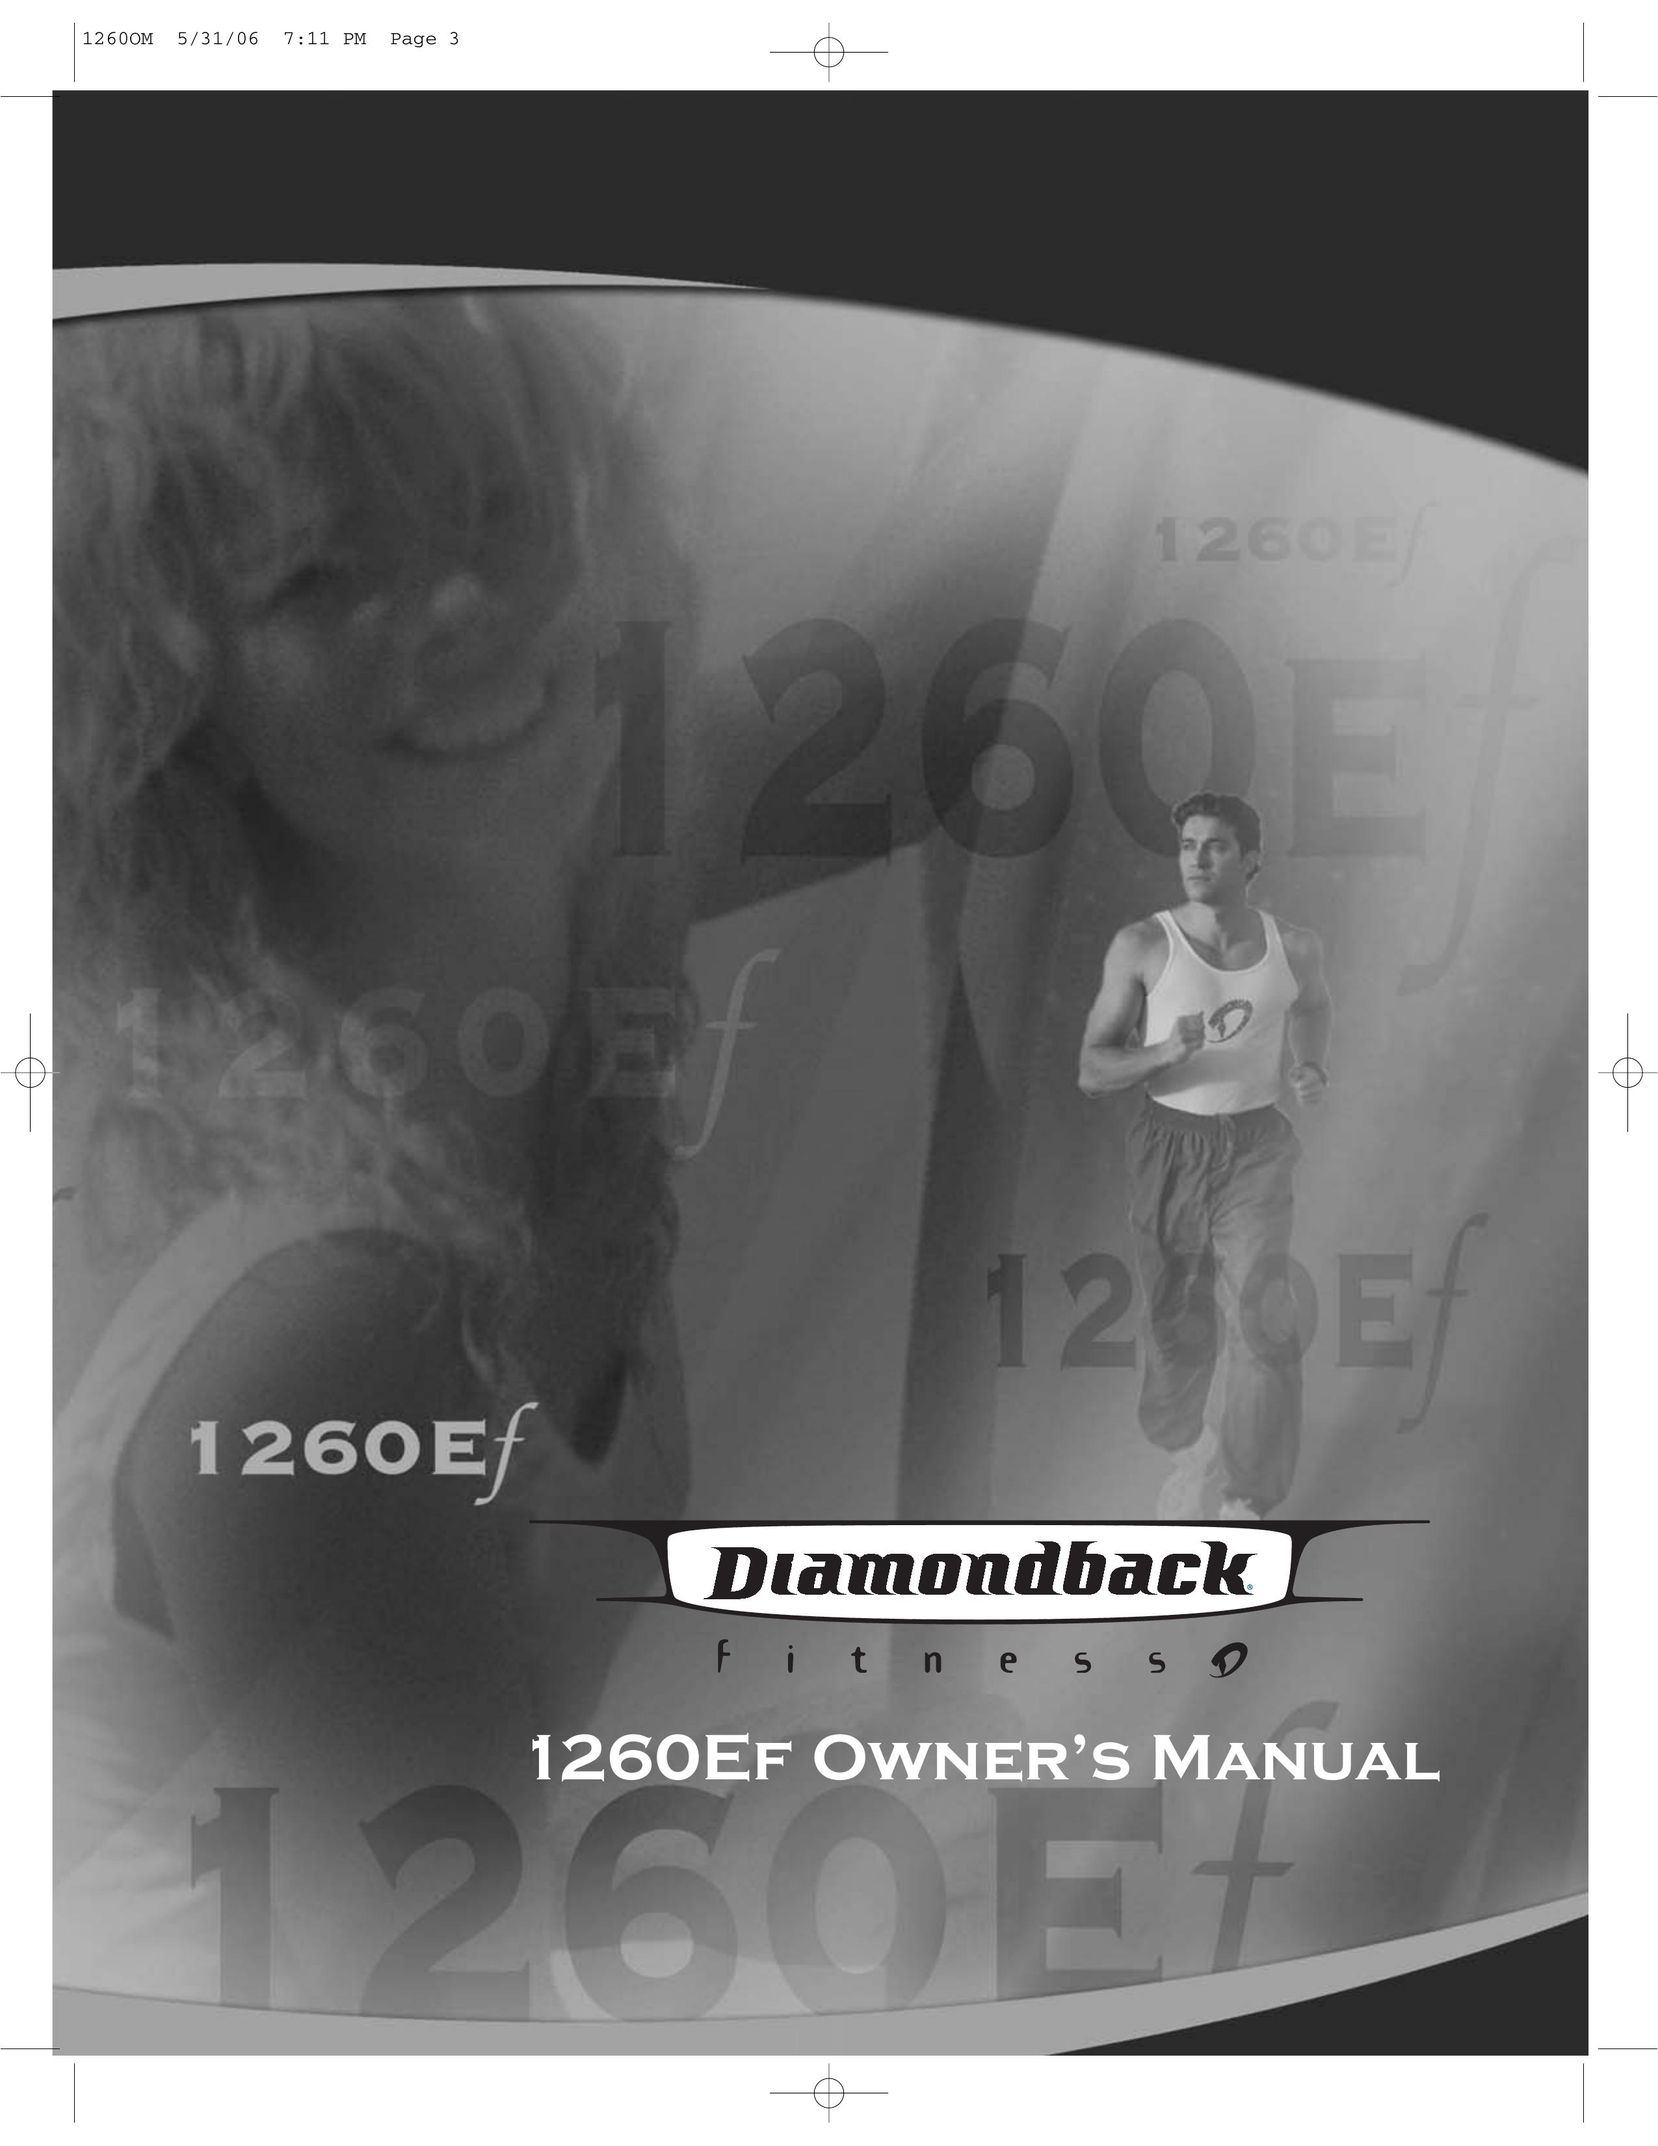 Diamondback 1260Ef Home Gym User Manual